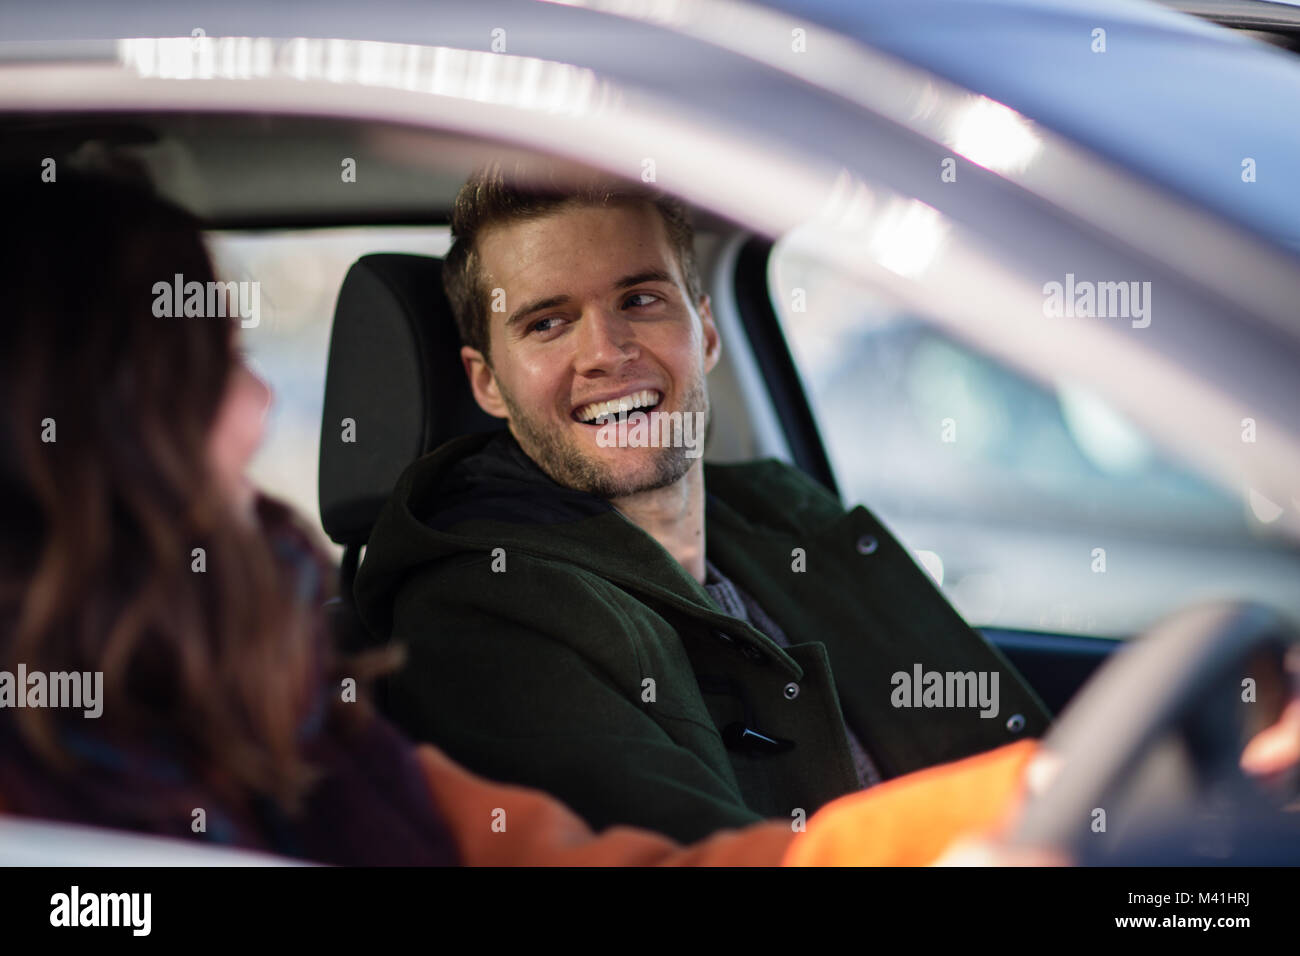 Passenger smiling at driver Stock Photo